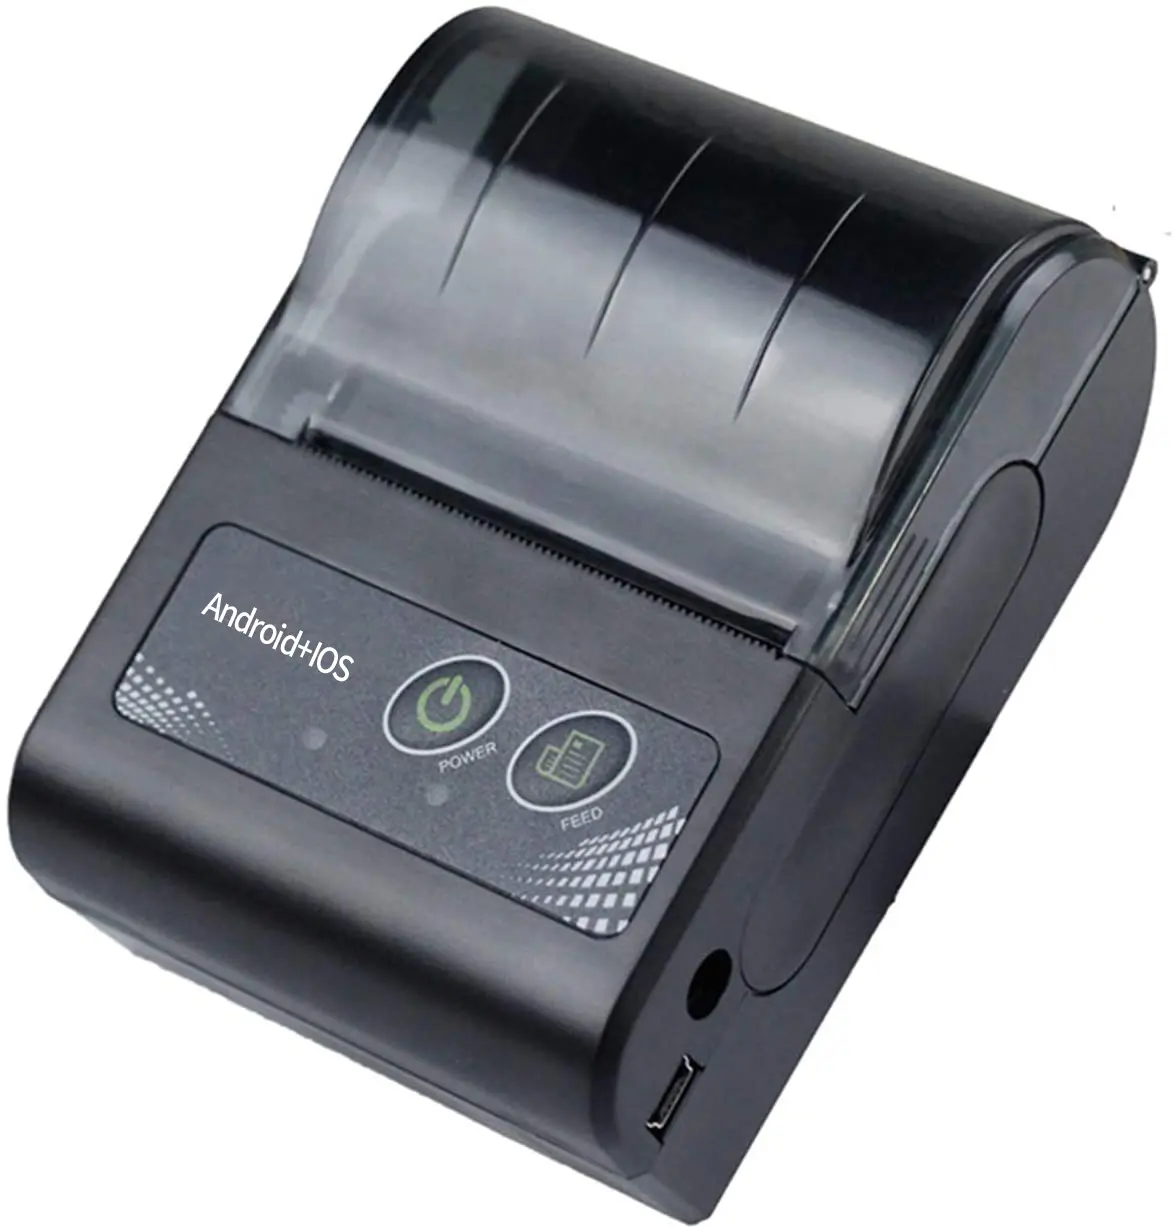 58mm Thermal Receipt Printer Portable Mini Wireless Thermal Printer USB Receipt Bill Ticket POS Printing für iOS Android Windows